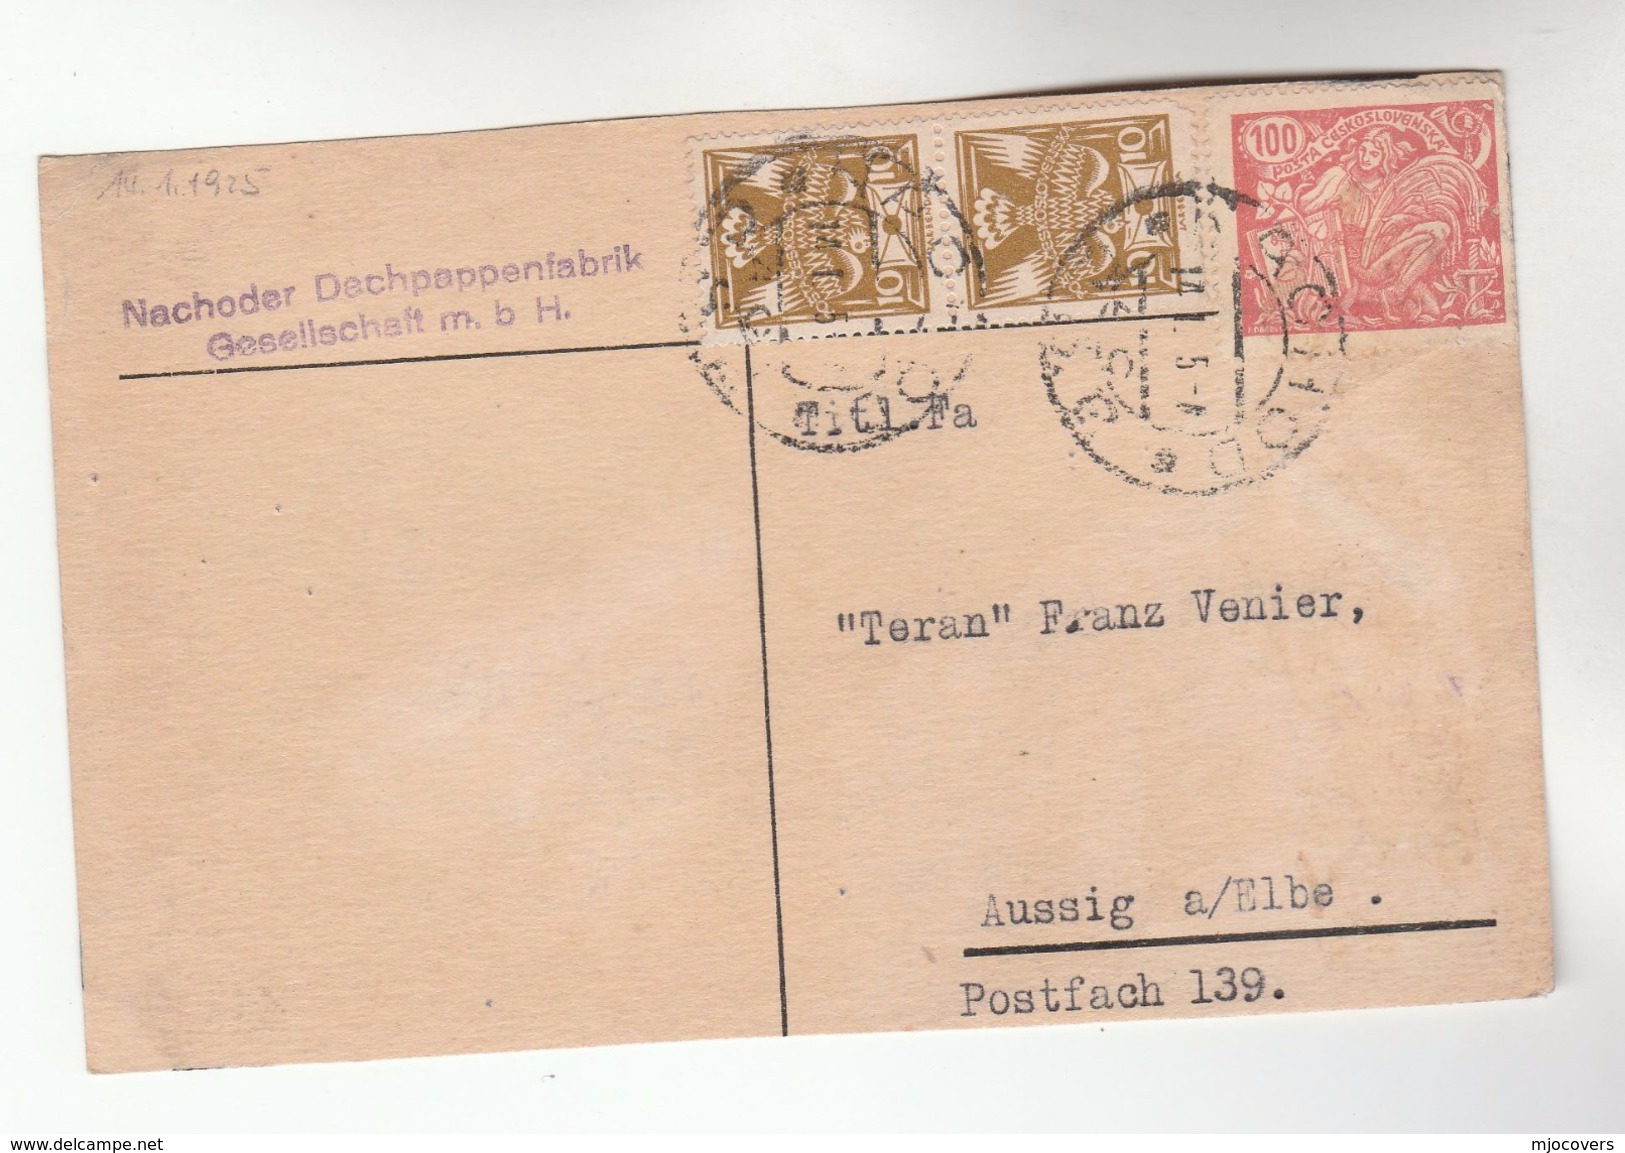 1925 CZECHOSLOVAKIA Stamps COVER (card) Nachoder Dachpappenfabrik Gesellschaft - Covers & Documents